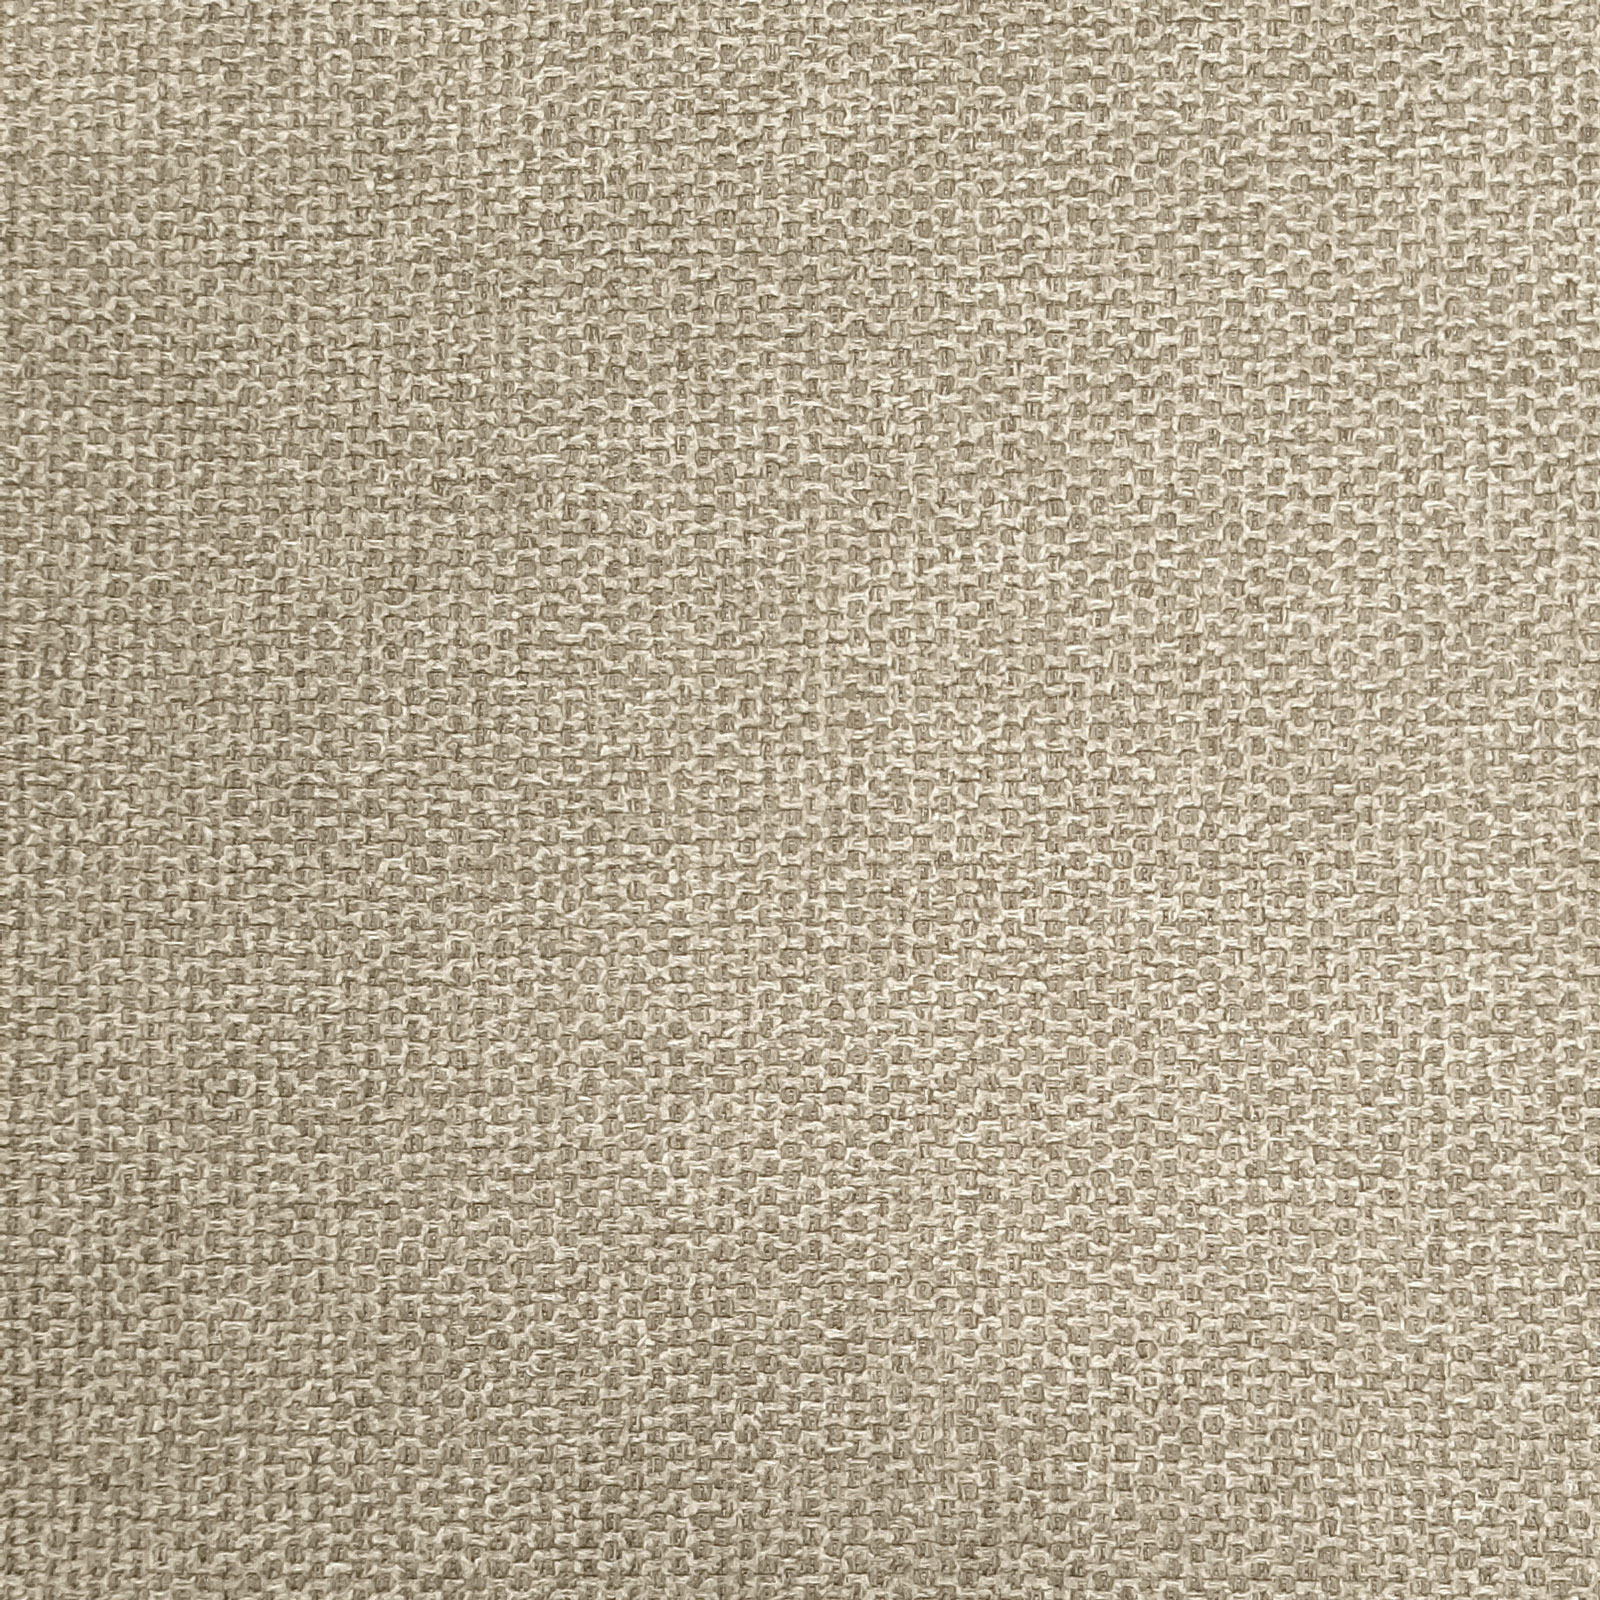 Paris - Oeko-Tex® upholstery fabric - flame retardant (DIN EN 1021-1) - Stone Melange